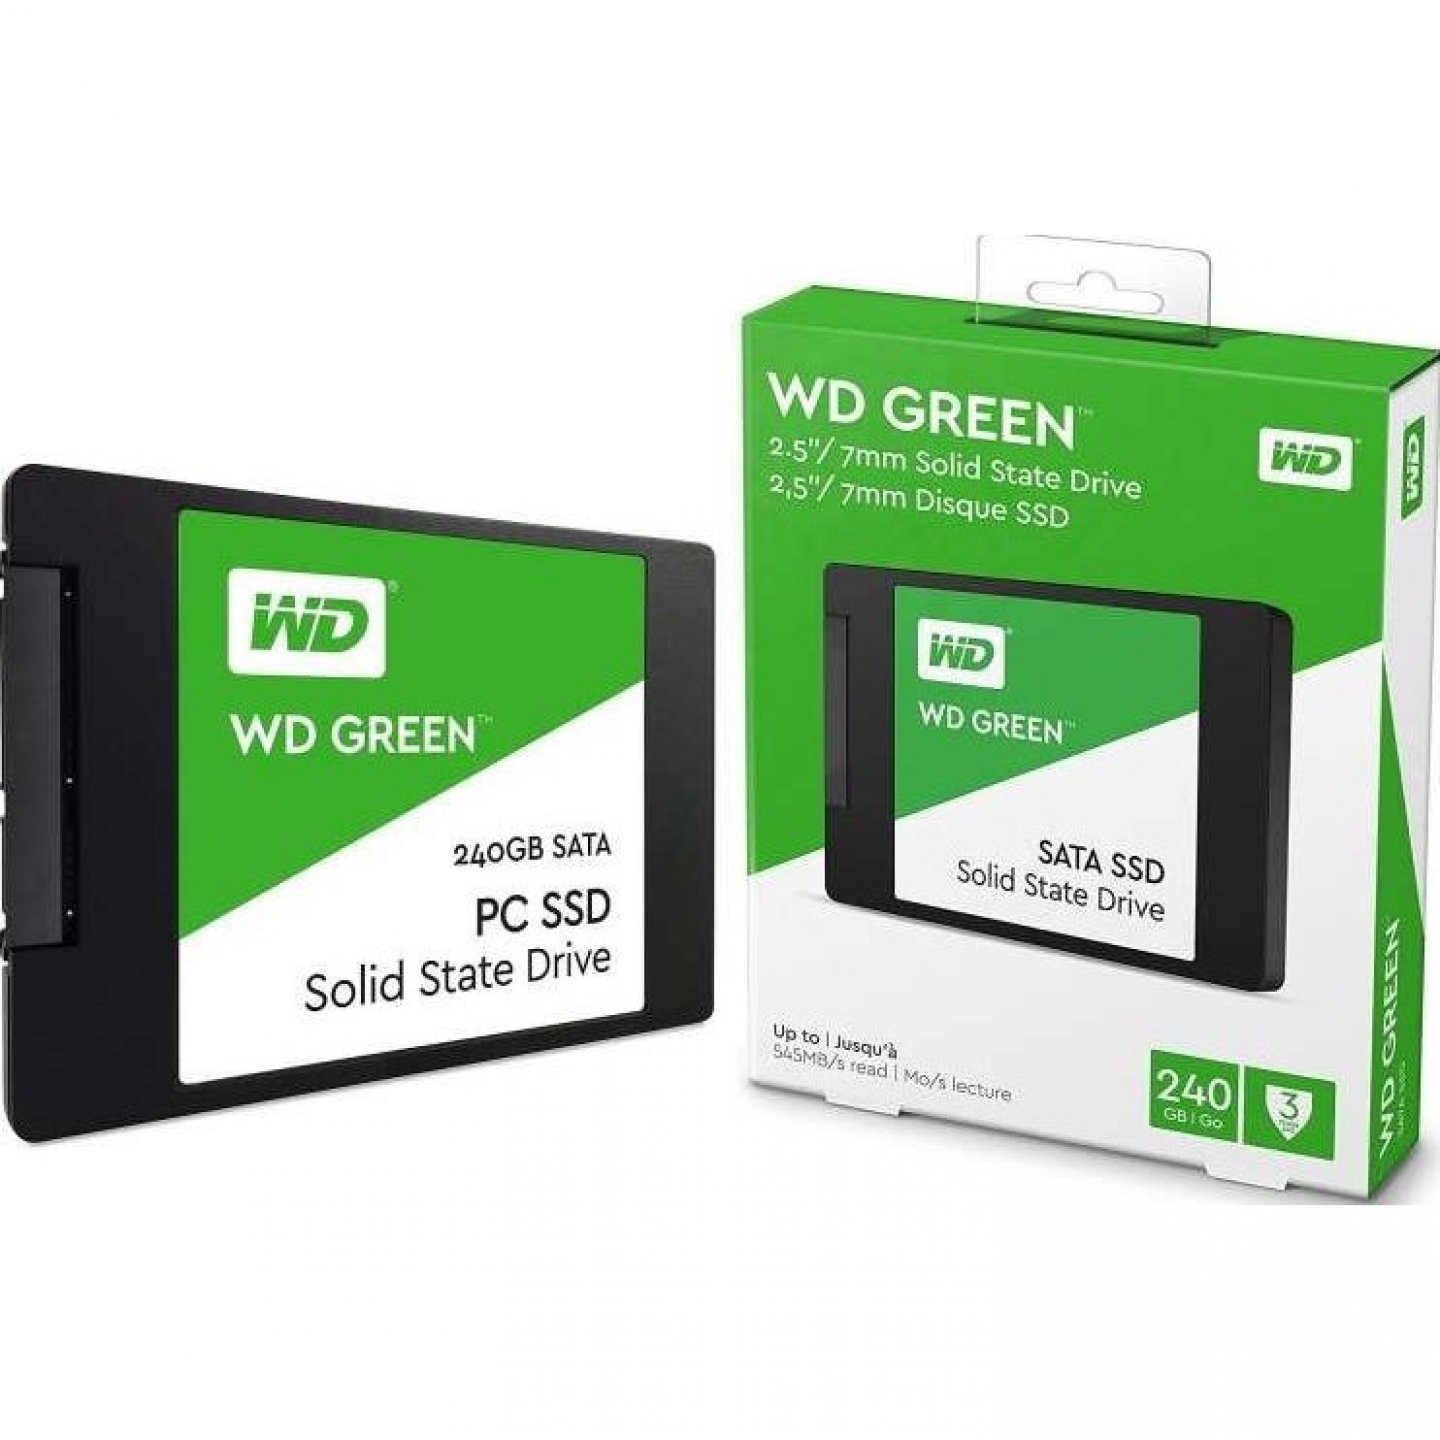 SSD WD GREEN 2,5